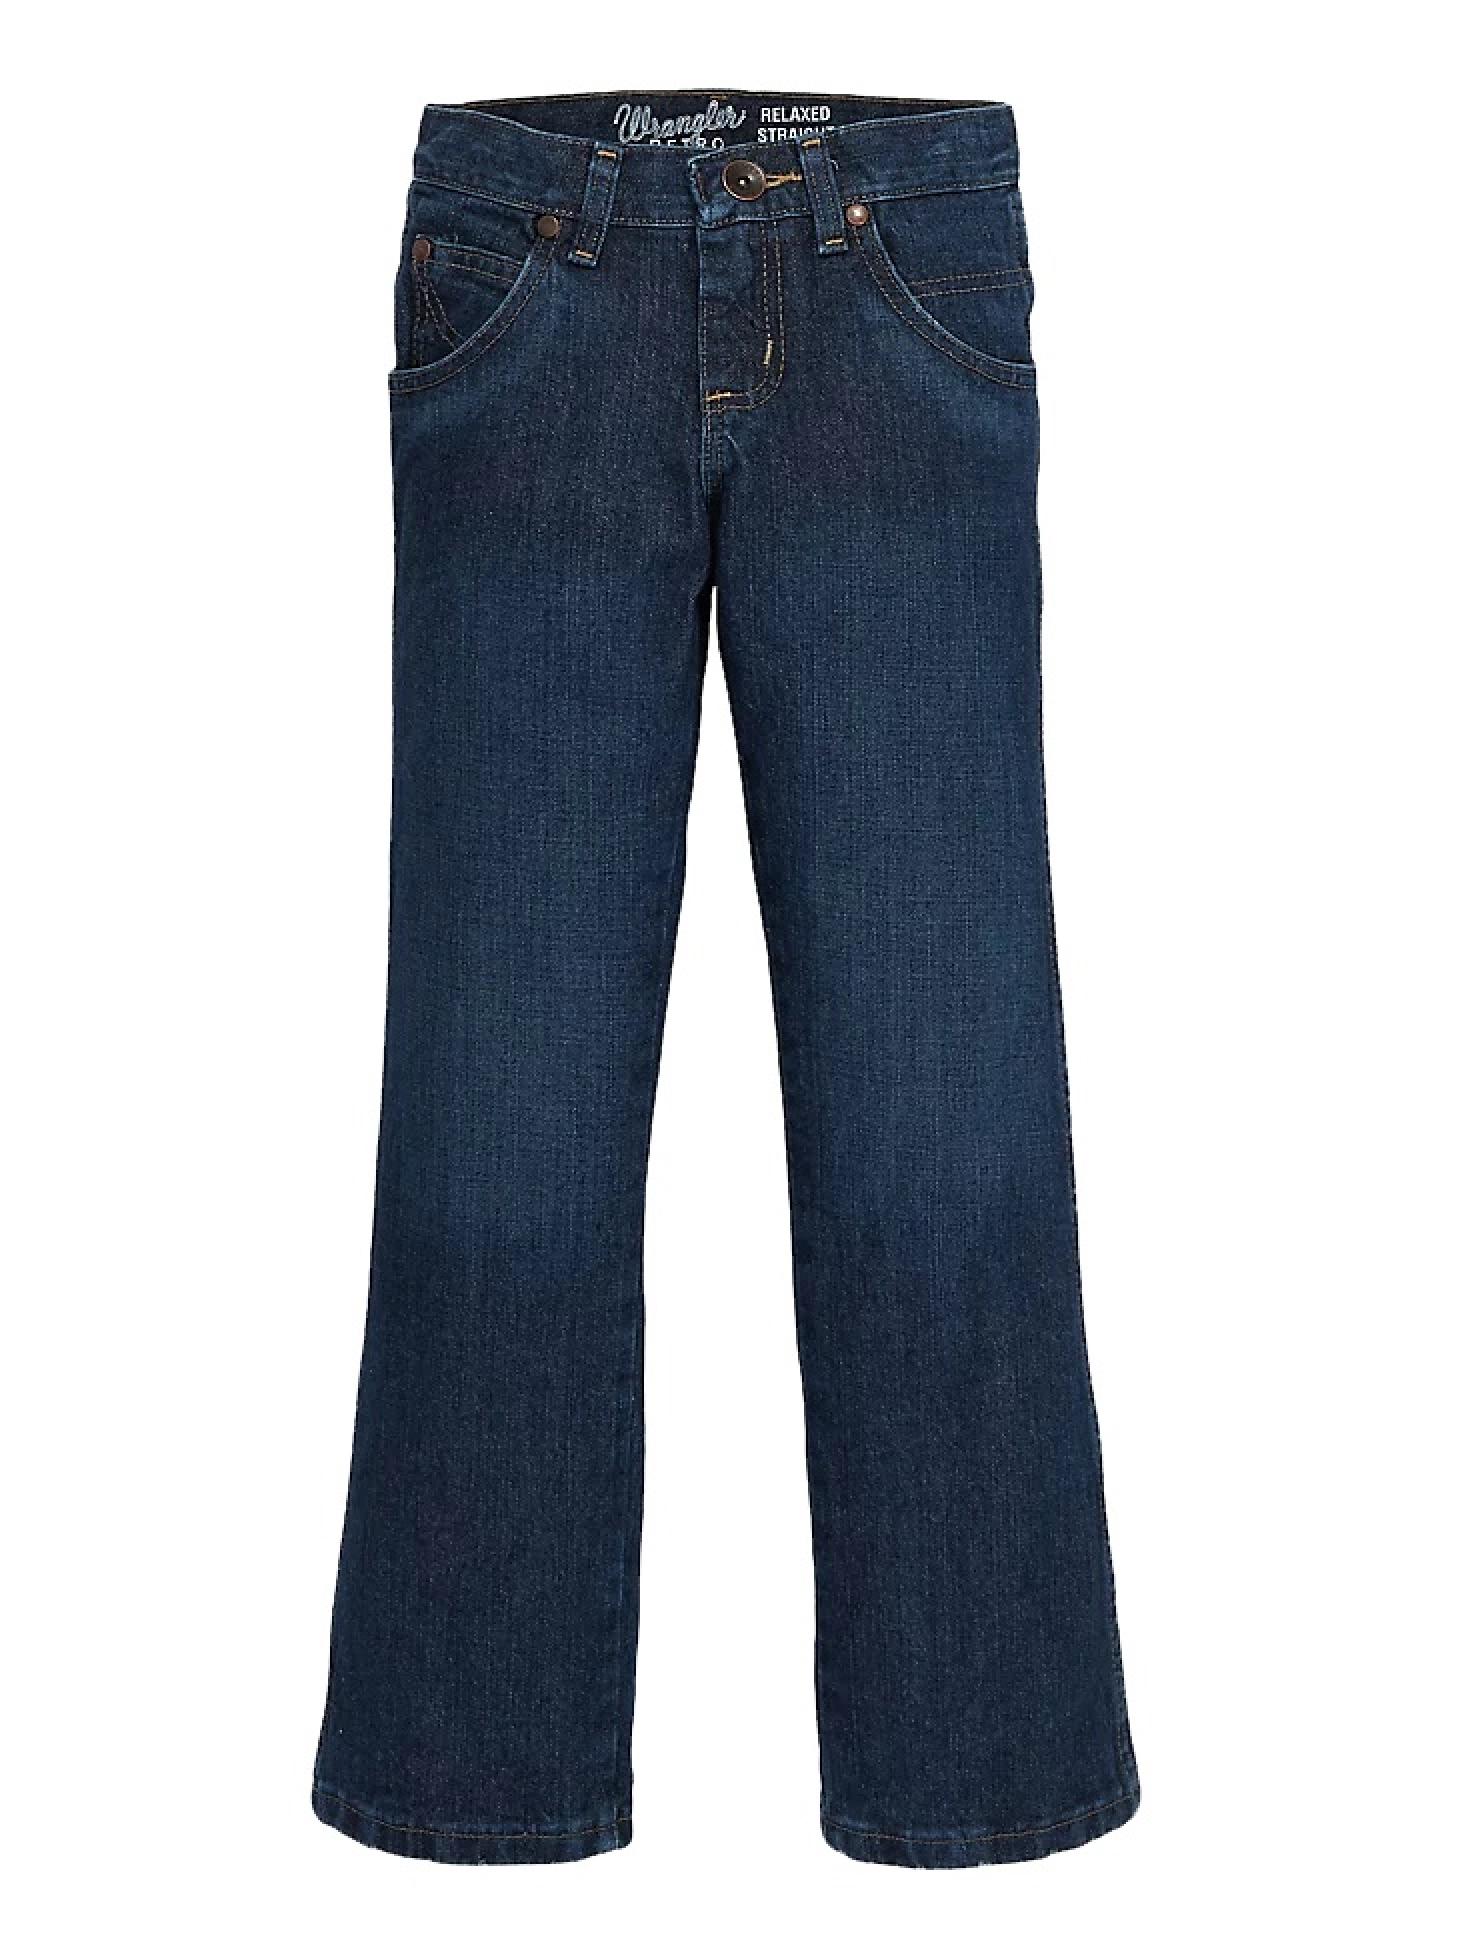 Wrangler Boy's Retro Straight Fit Jeans